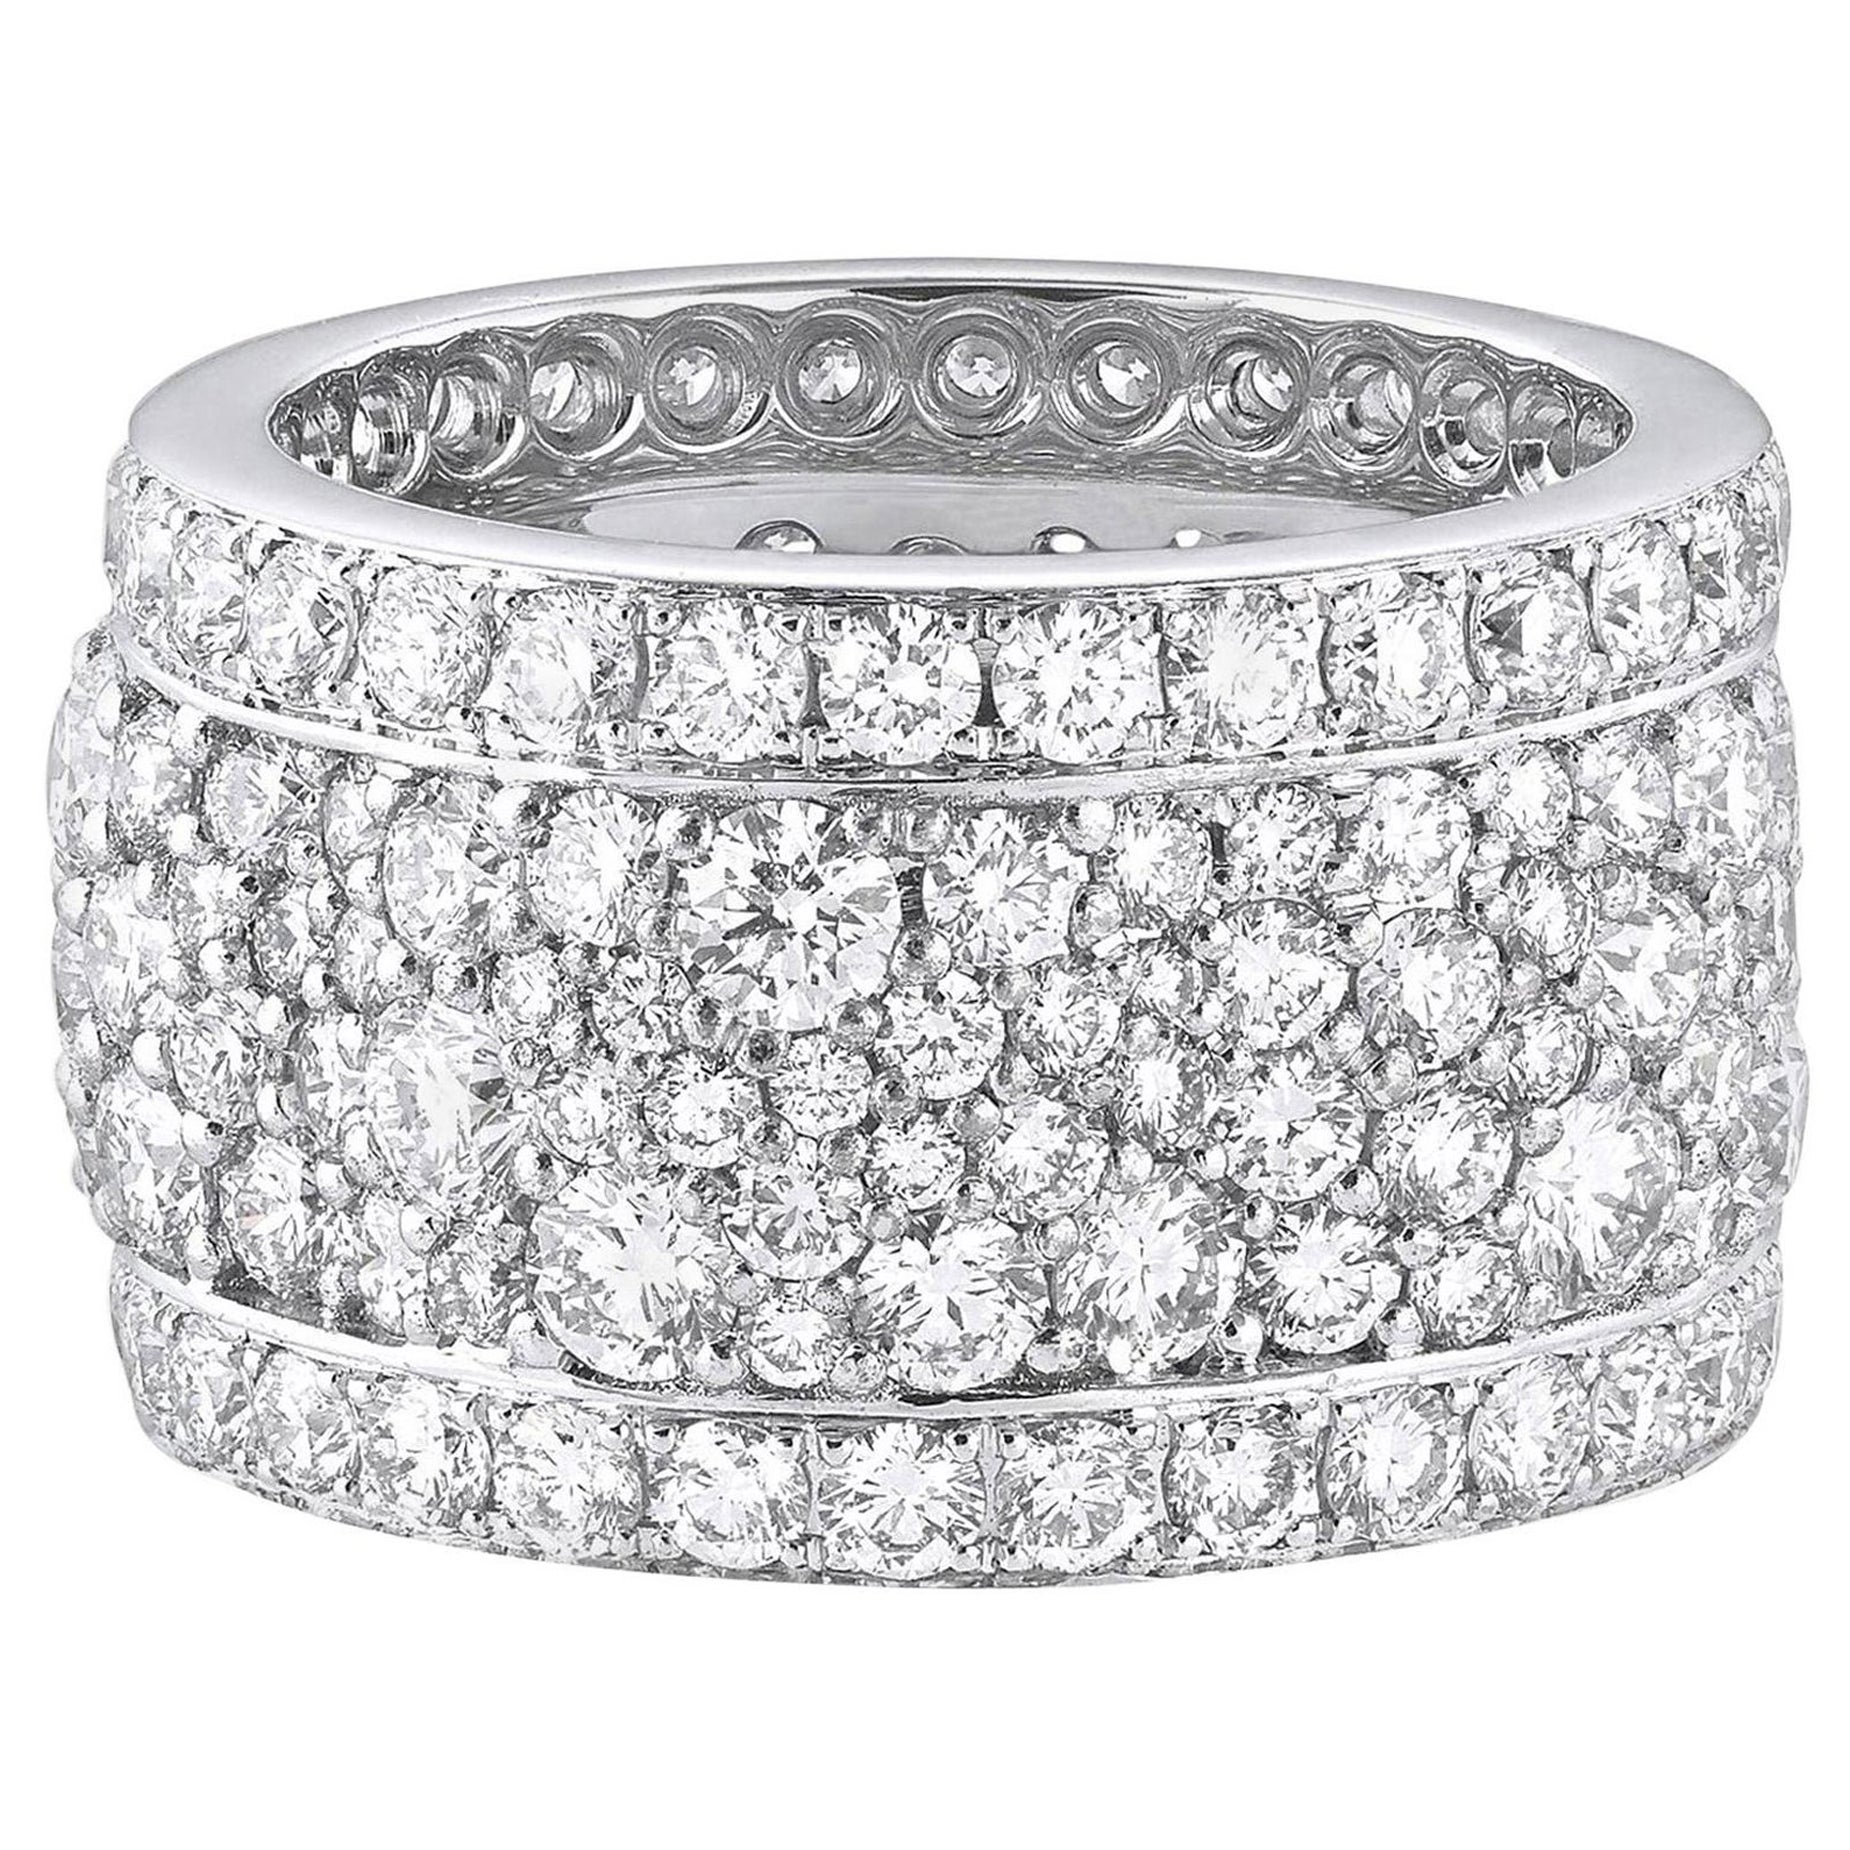 A Vanleles pavé-diamond band ring